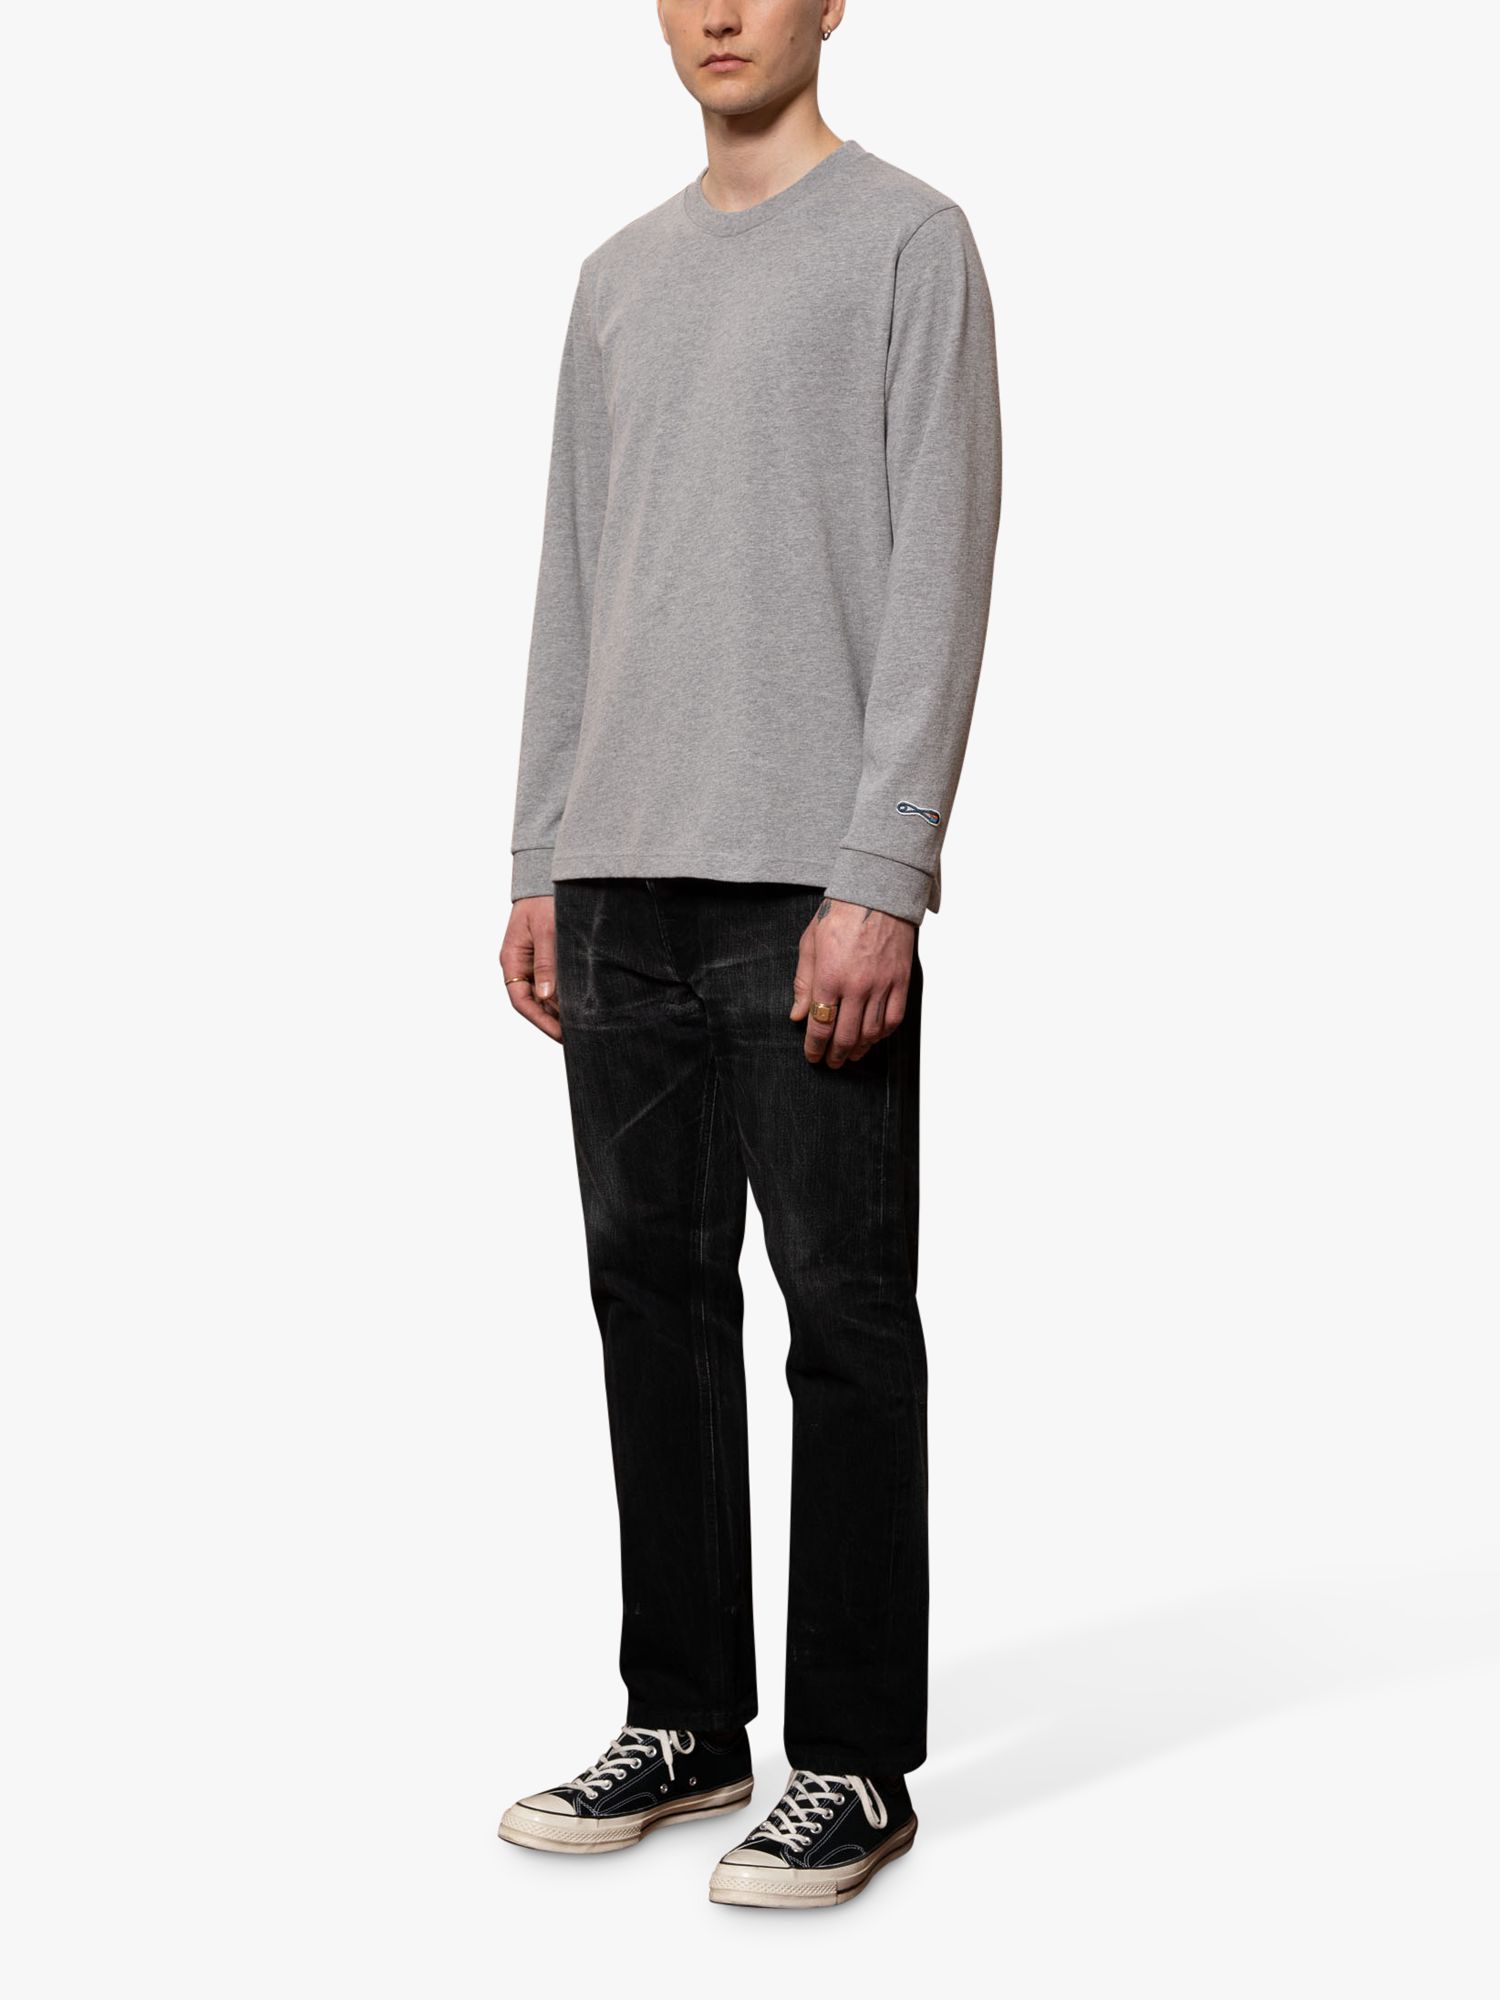 Nudie Jeans Long Sleeve T-Shirt, Grey, L